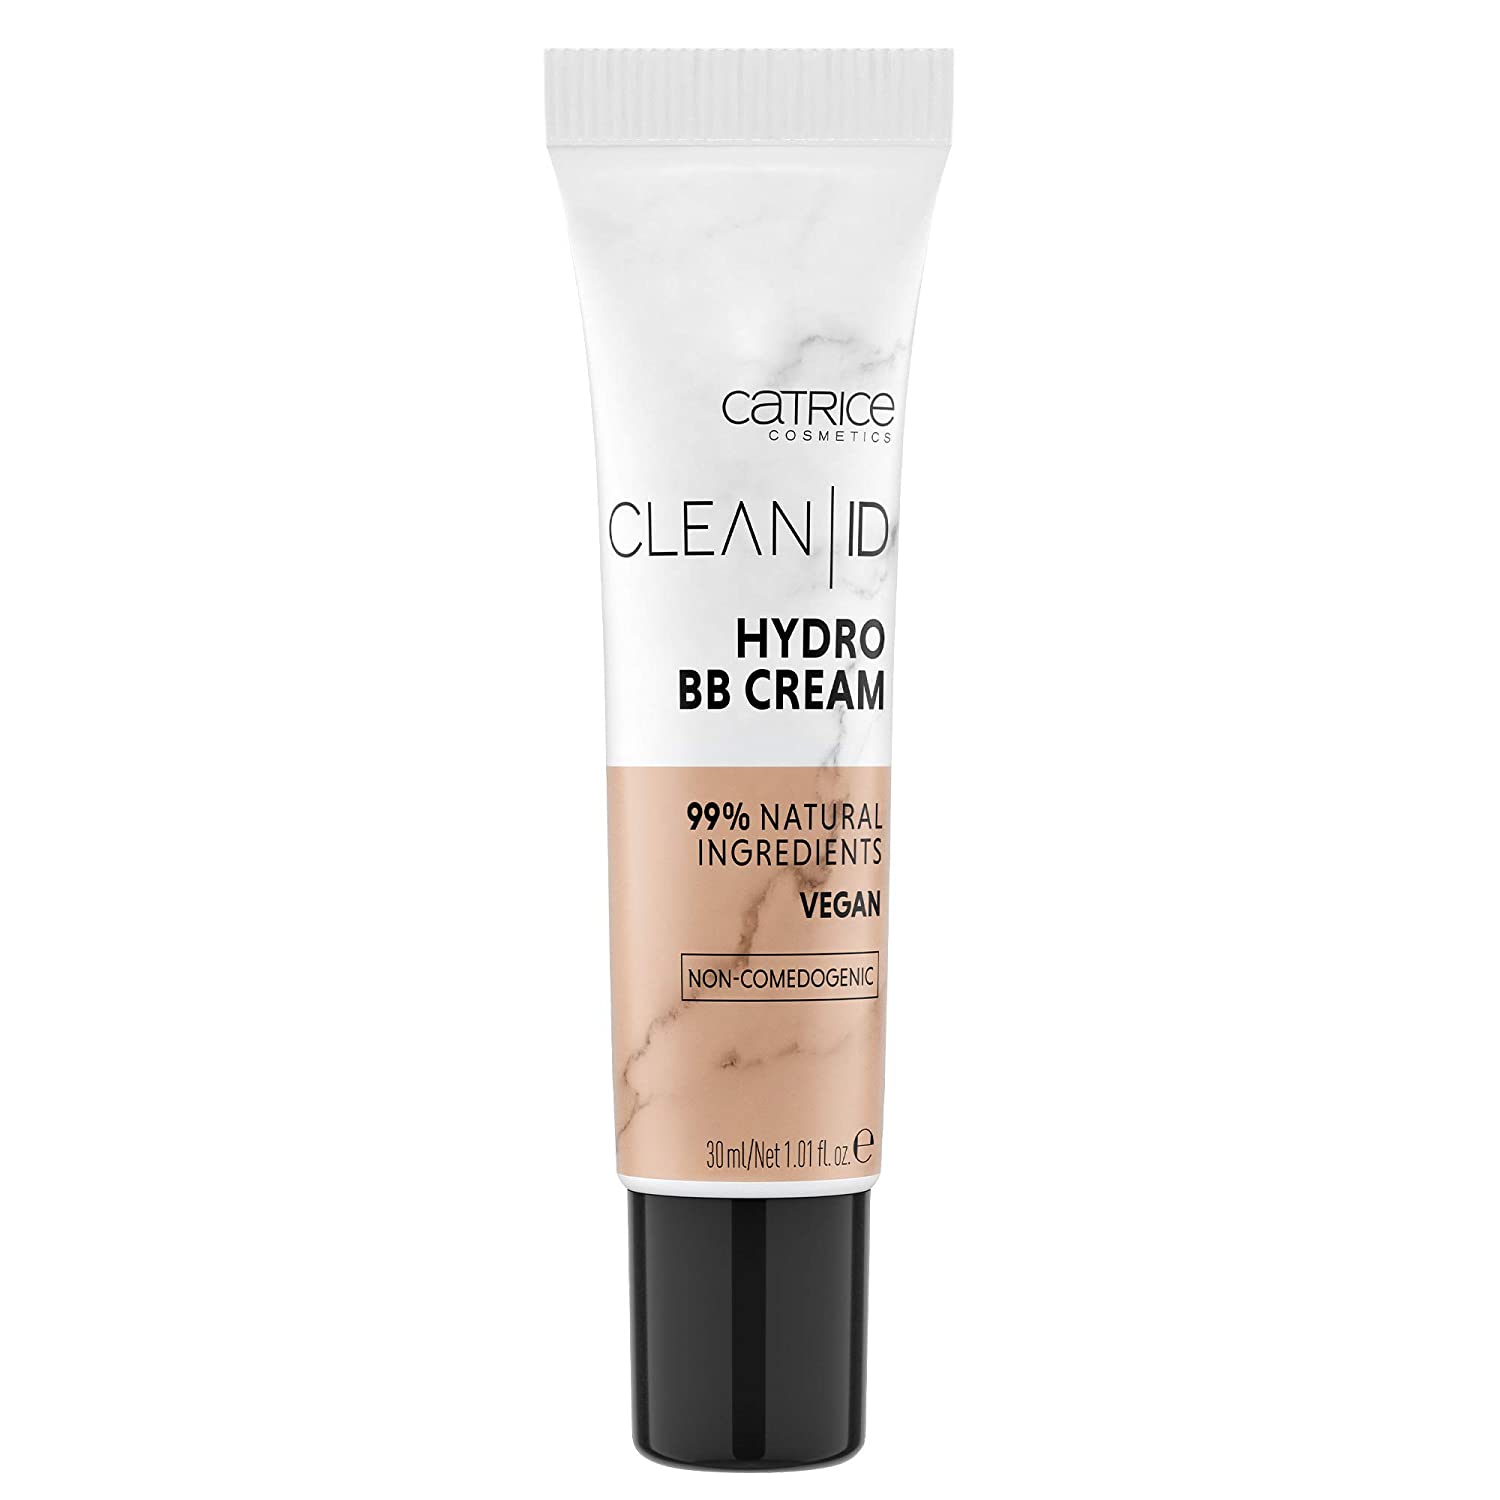 Catrice Clean ID Hydro BB Cream, Make Up, Foundation, No. 020 Medium, Nude, for Sensitive Skin, for Dry Skin, for Combination Skin, Moisturising, Natural, Vegan, Perfume Free (30 ml), medium ‎020